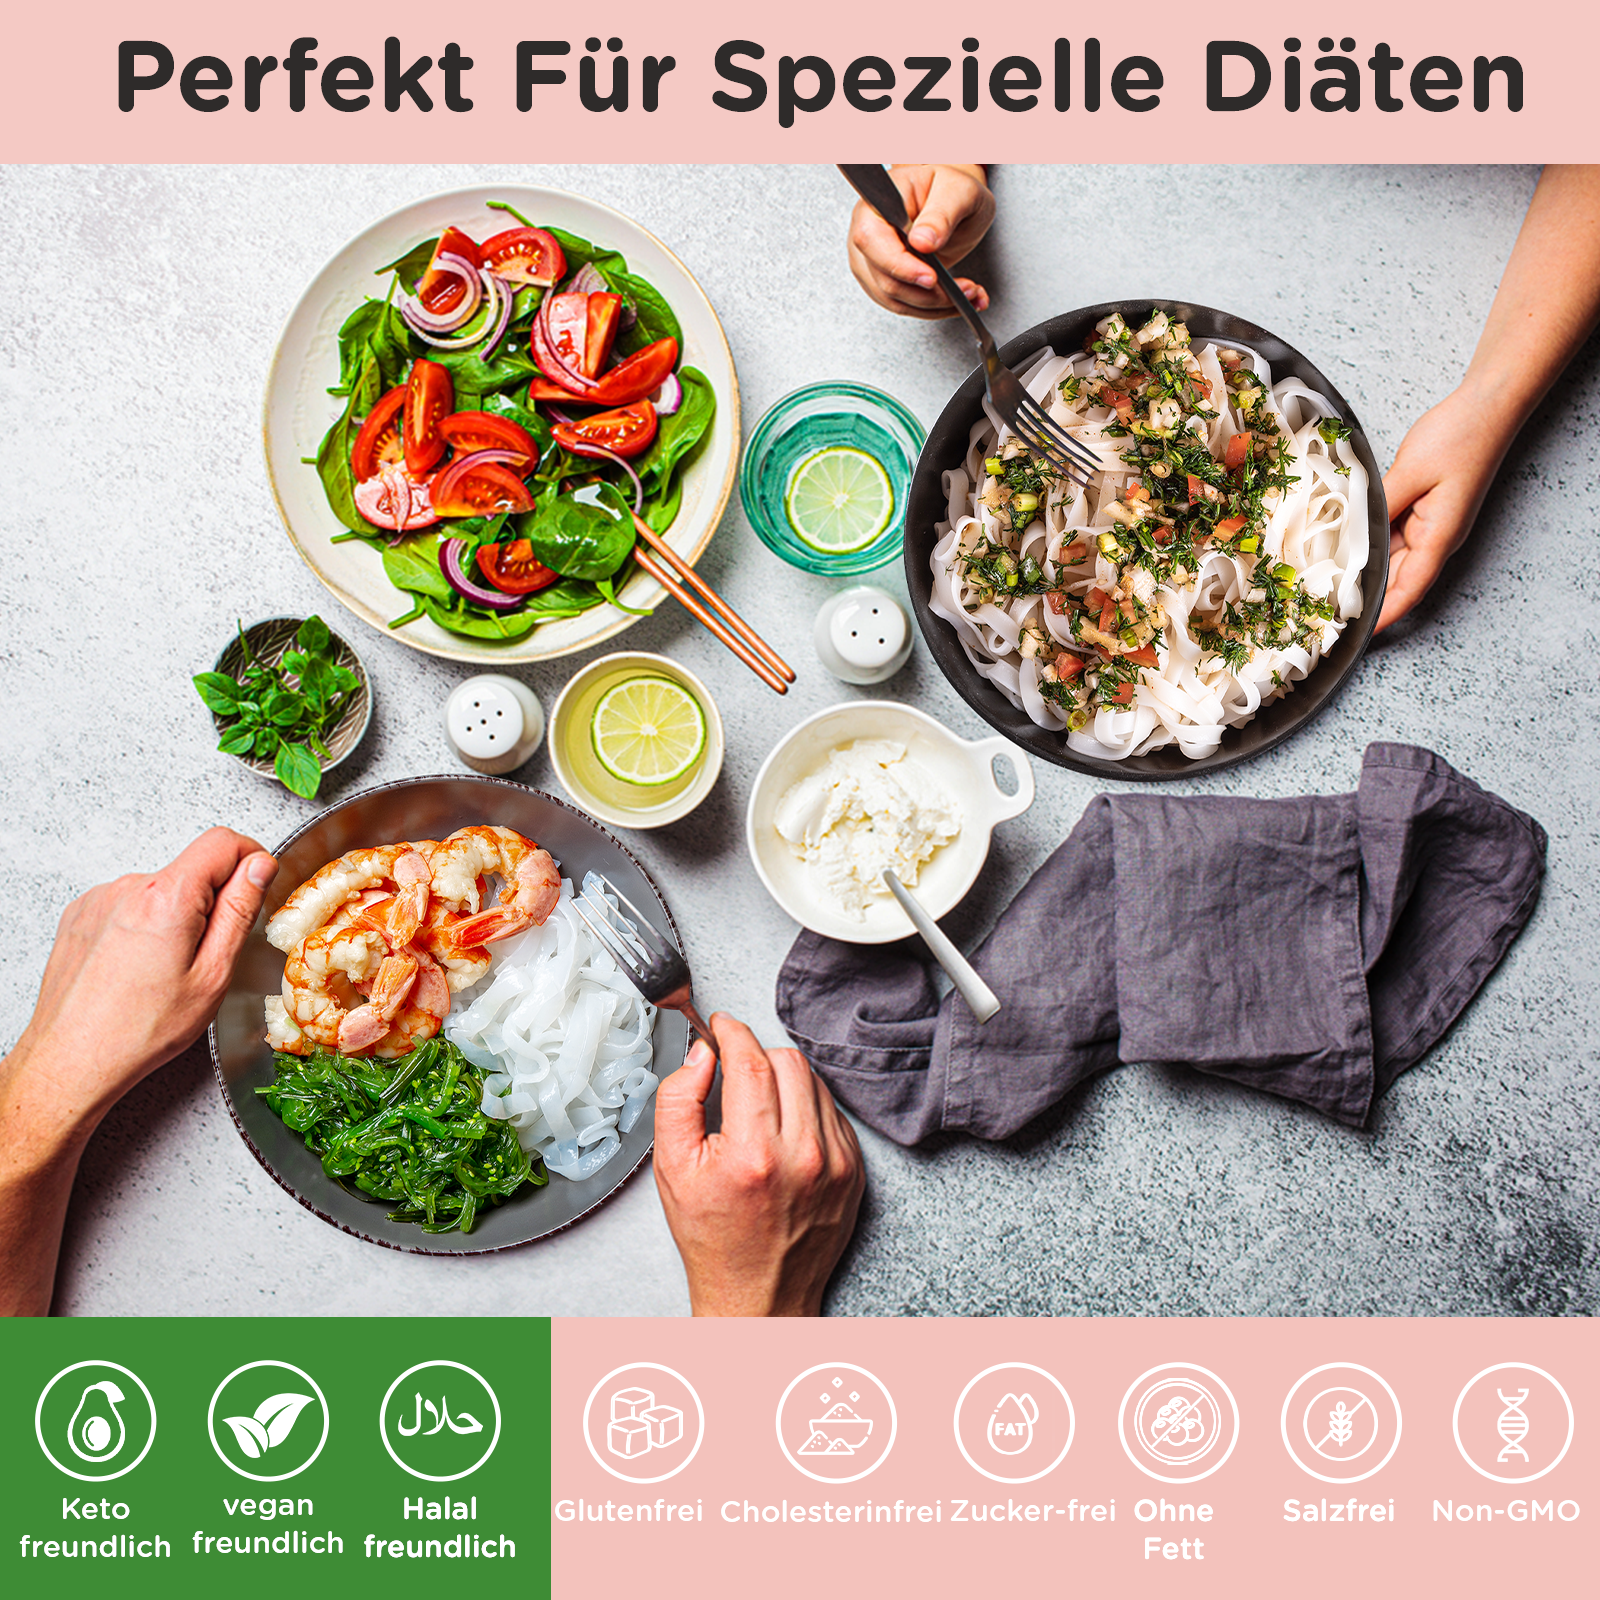 Elf-Family Premium 3+3 Sorten Probierpaket Konjak Nudeln 9kcal Low Carb/Vegan/Instant Shirataki Nudeln/Keto/Kalorienarme/Glutenfrei/Zuckerfrei